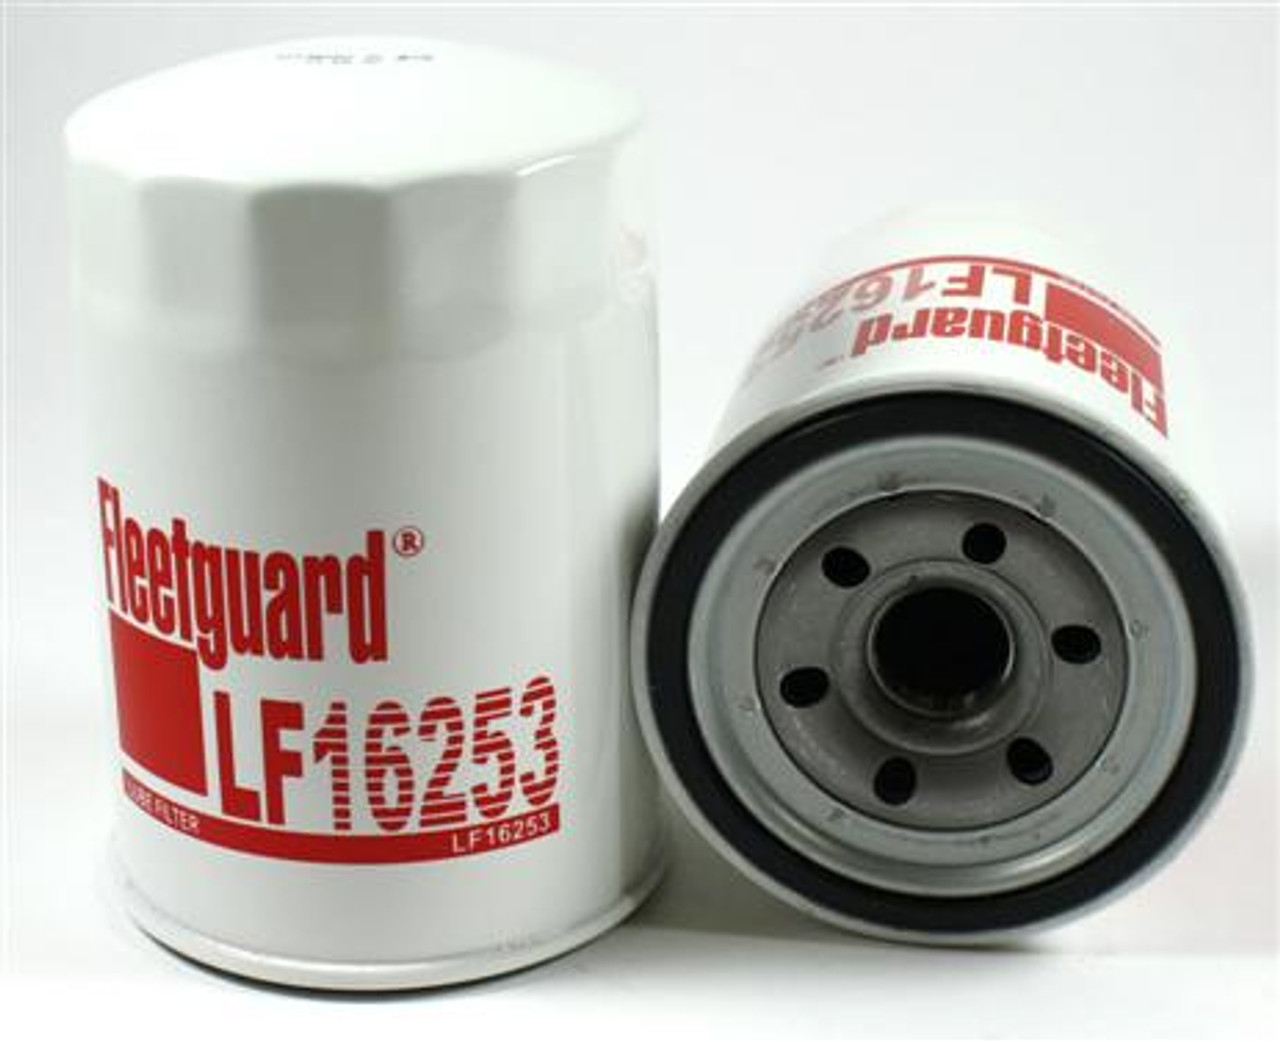 LF16253: Fleetguard Oil Filter